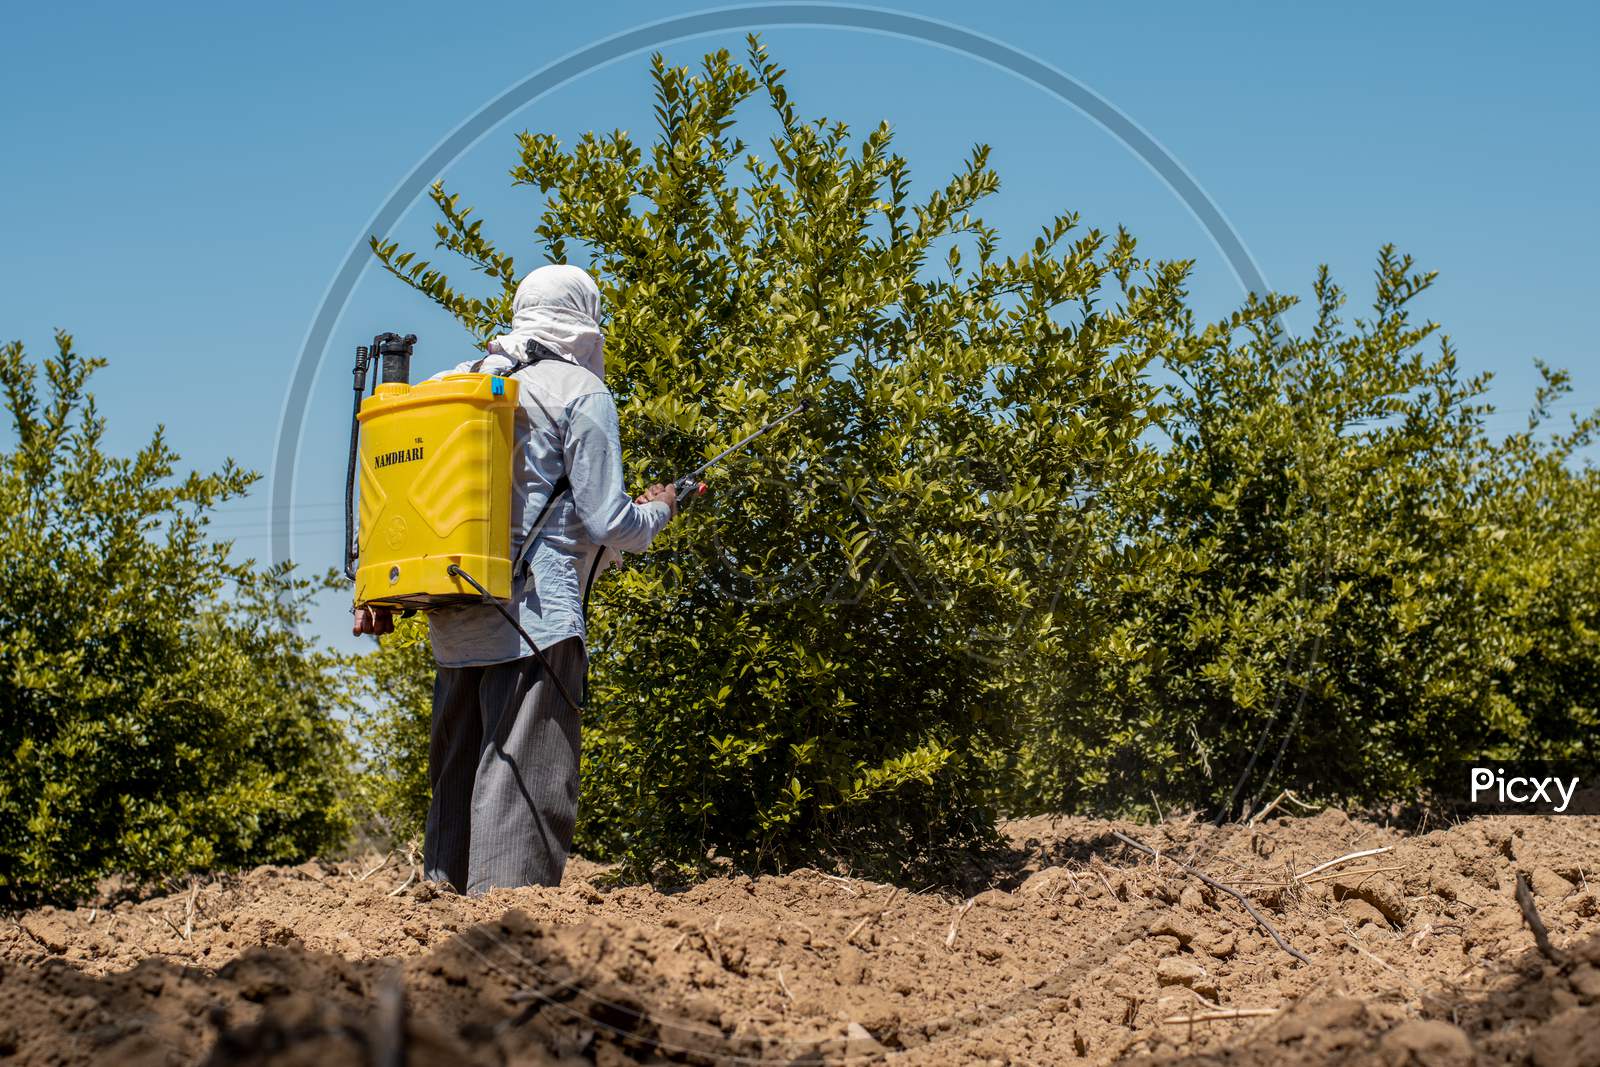 A farmer spraying pesticides using sprayer machine on the lemon trees